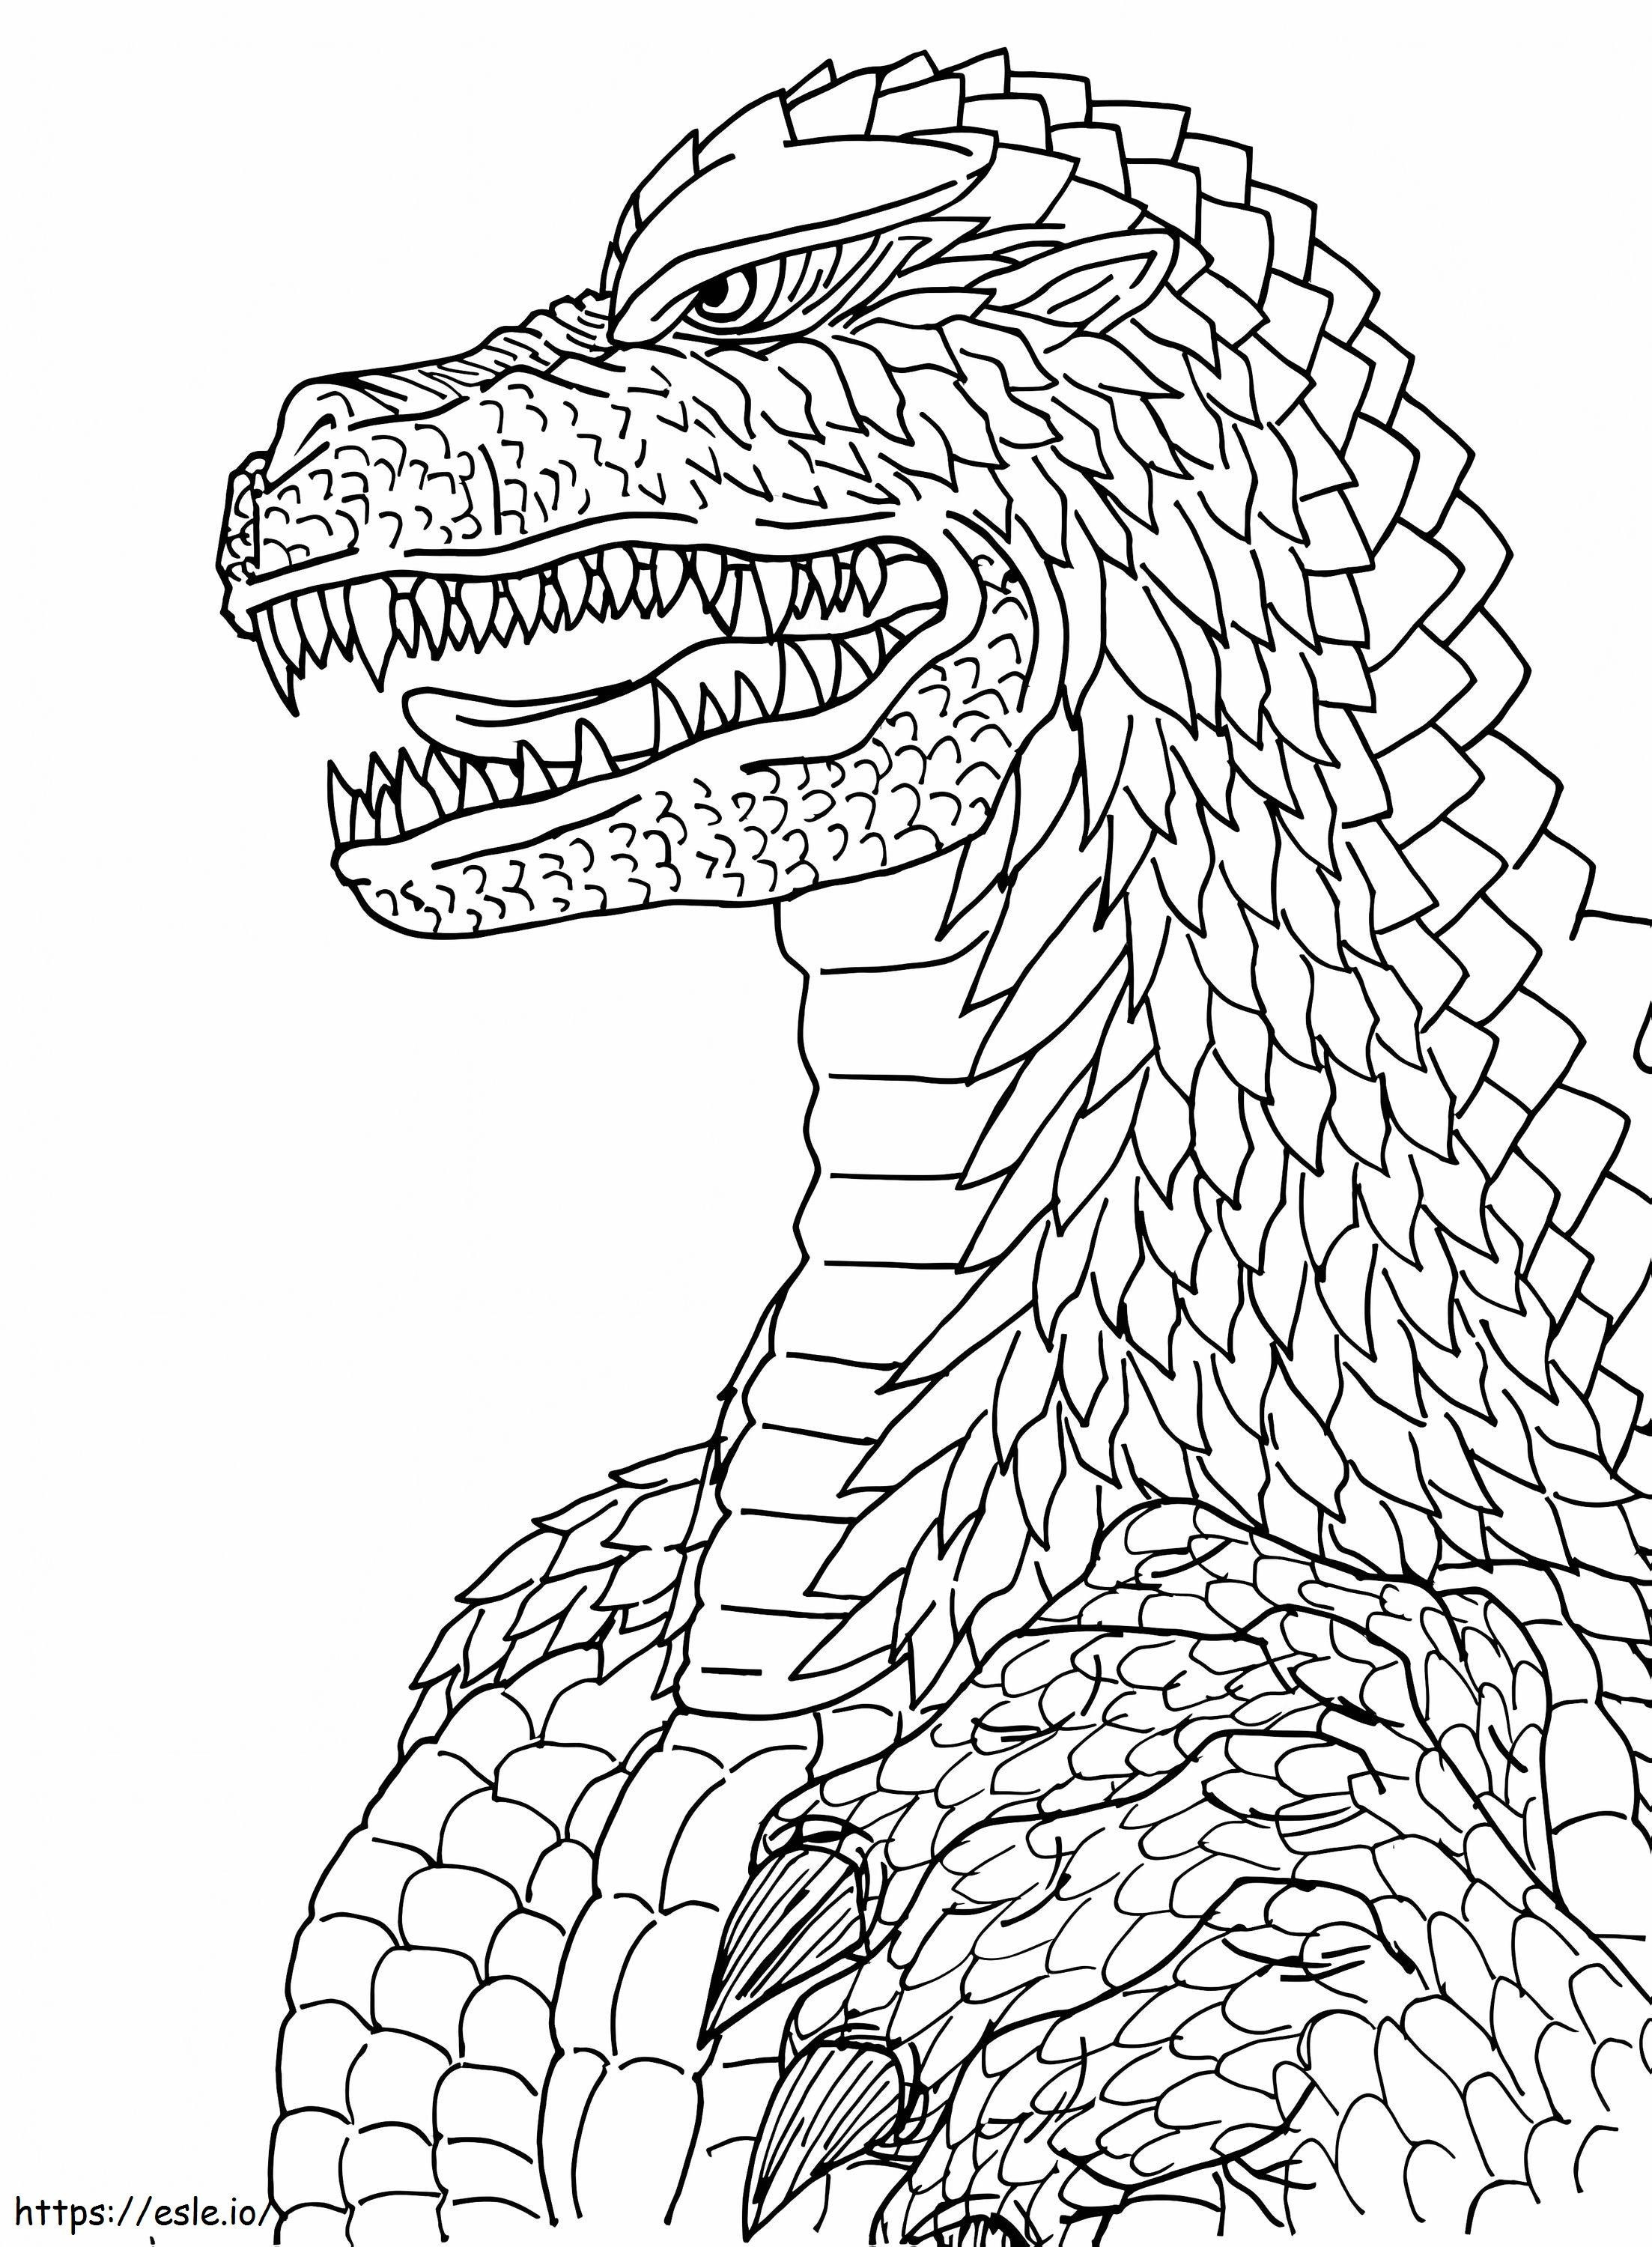 Godzilla Head coloring page